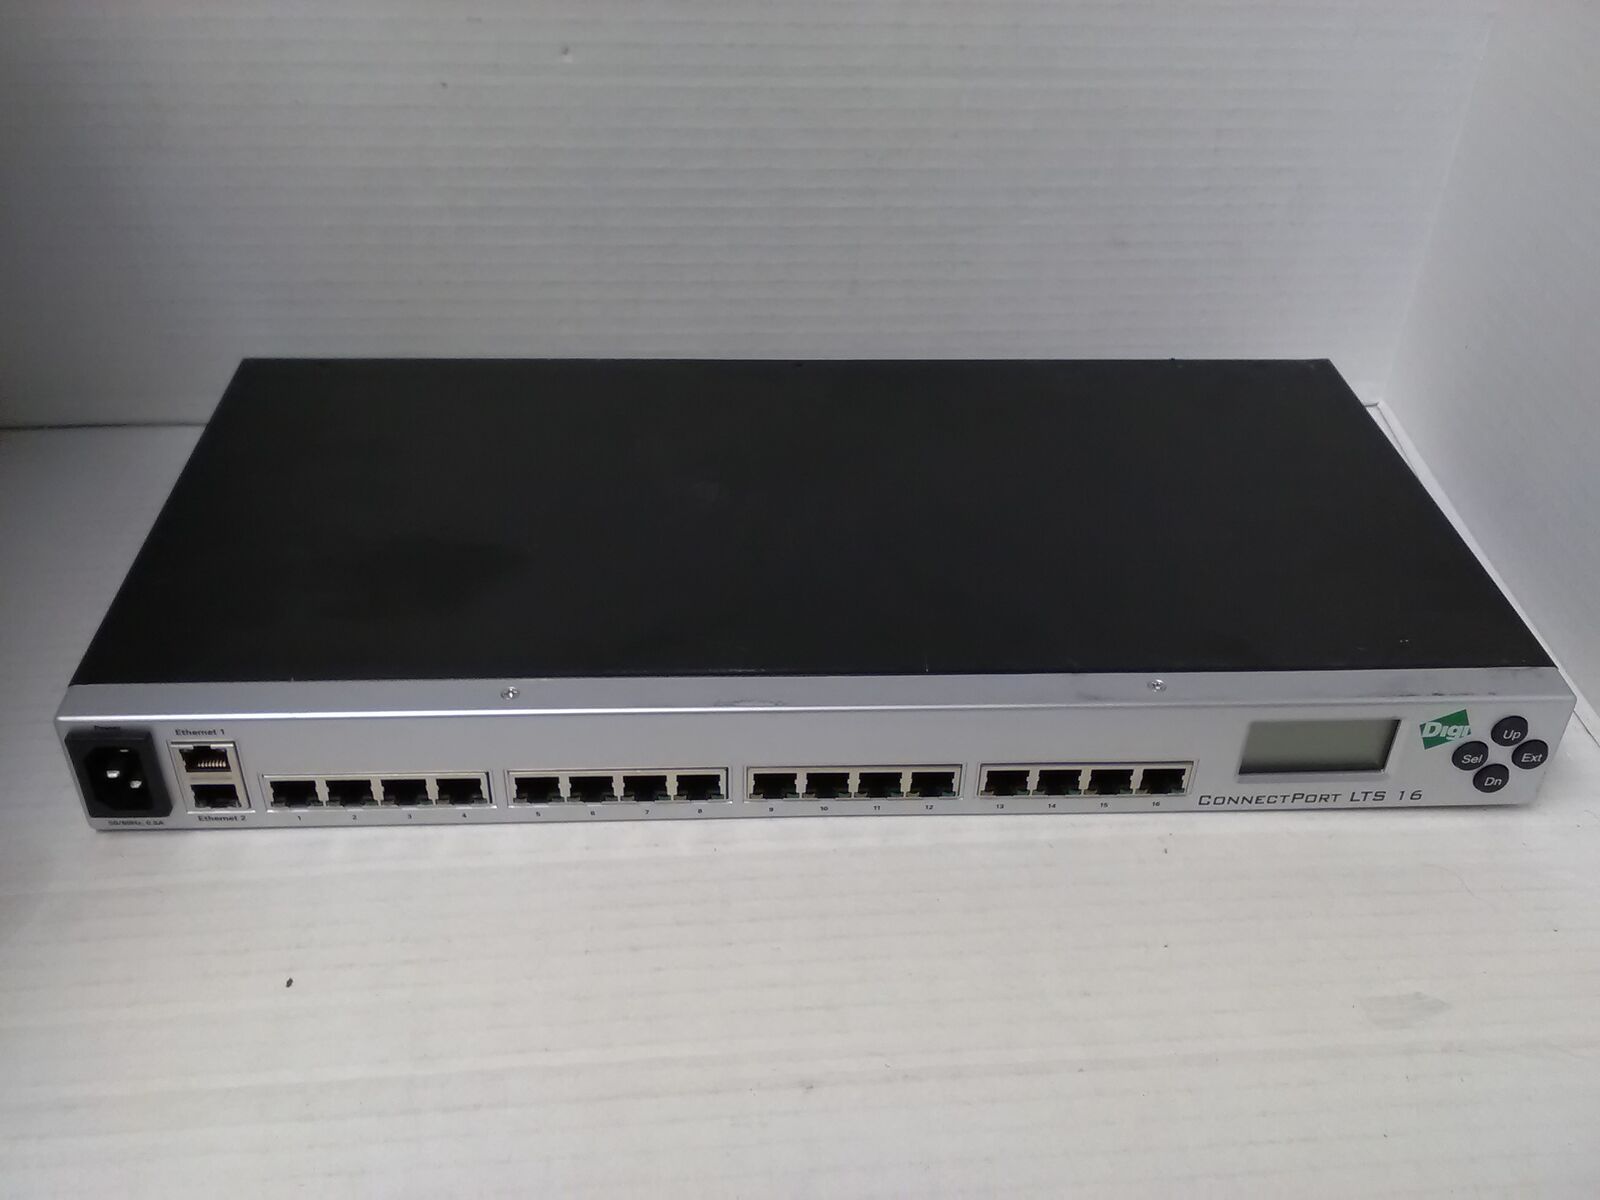 Digi 70002403 ConnectPort LTS 16 Terminal Server (2 Available) & Warranty